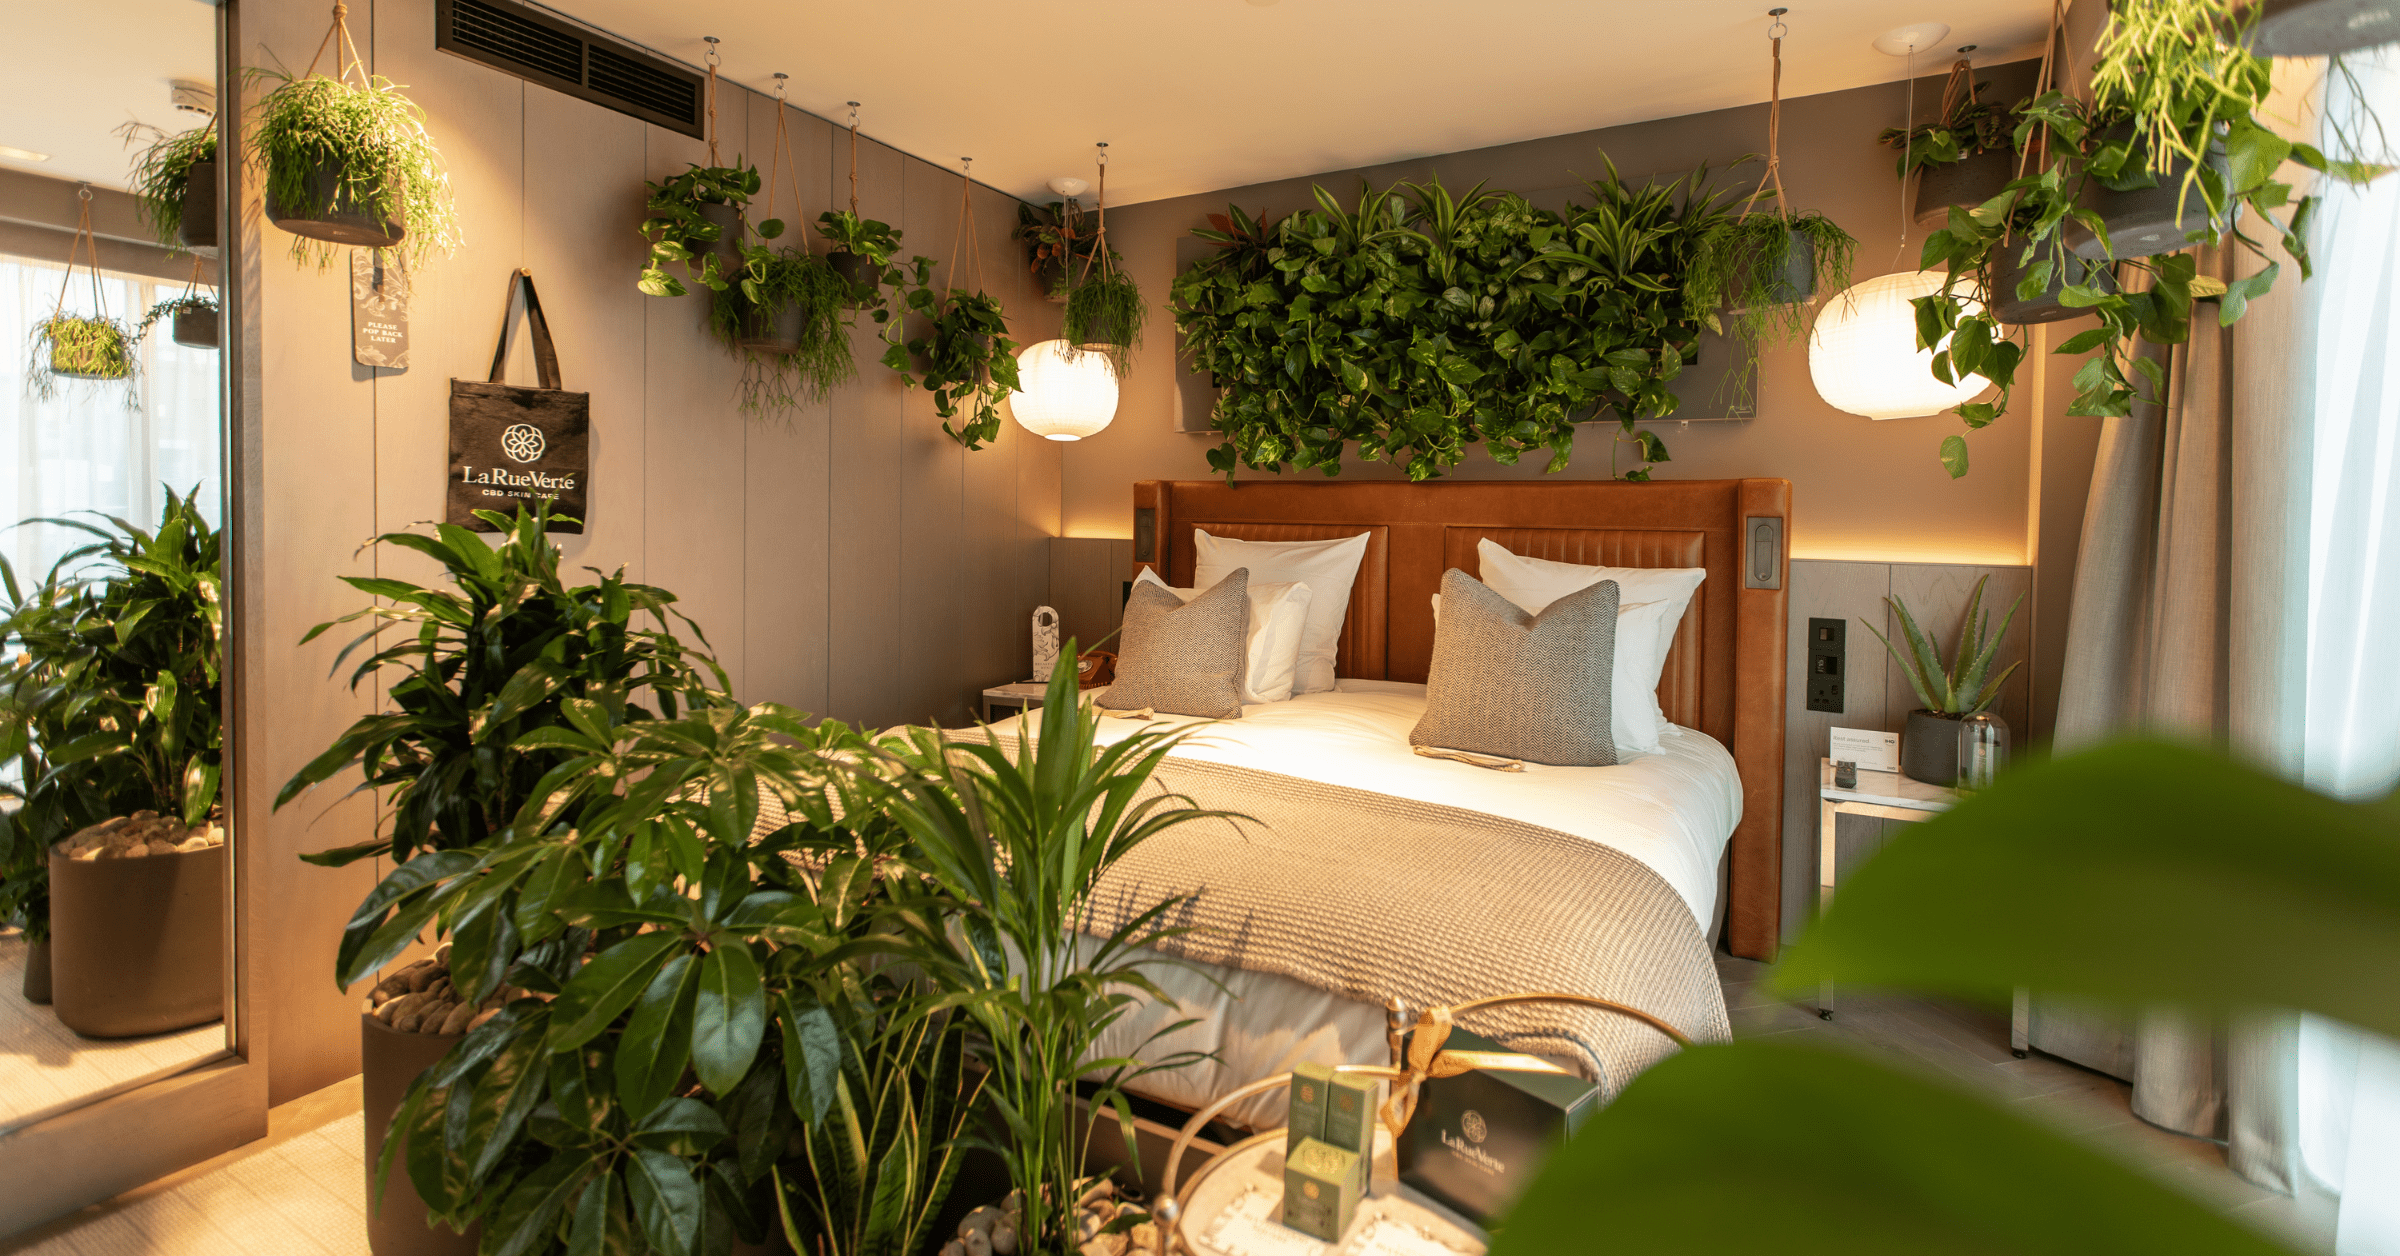 blythswood-square-hotel-la-chambre-verte-live-plants-image